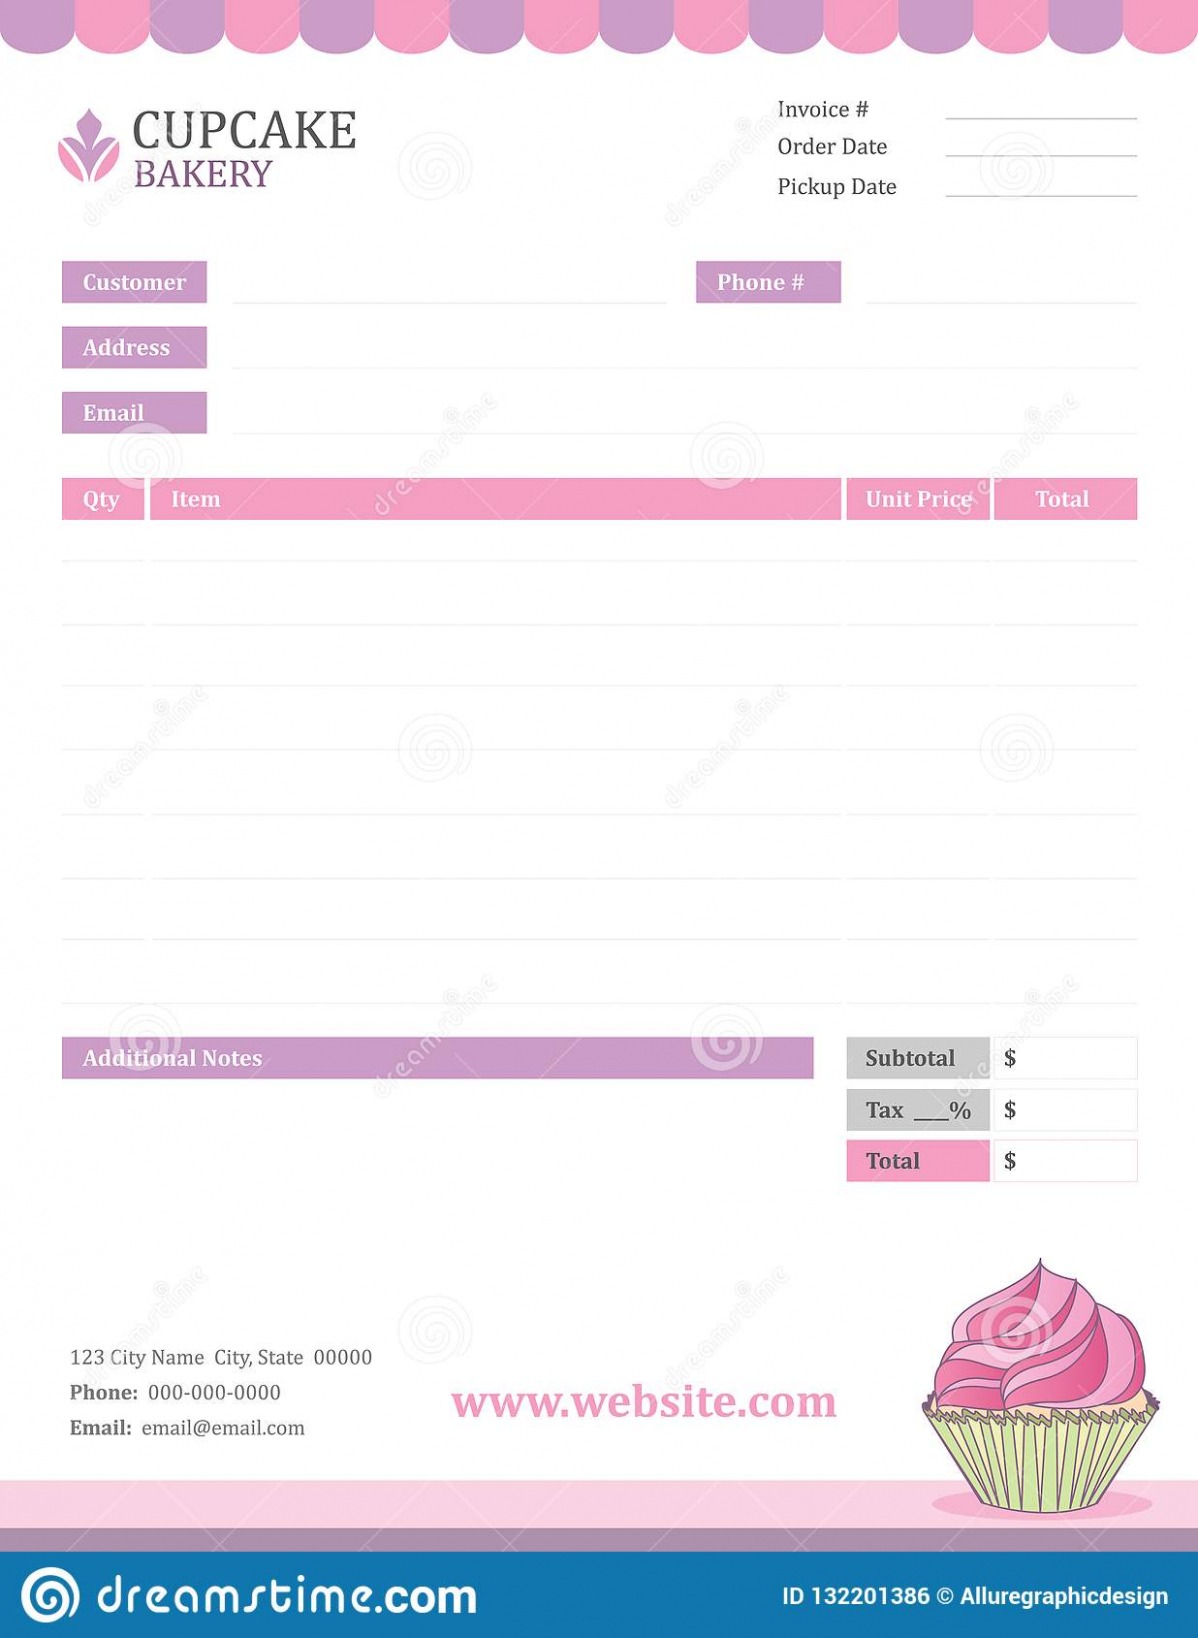 Sample Cupcake Invoice Template Sample